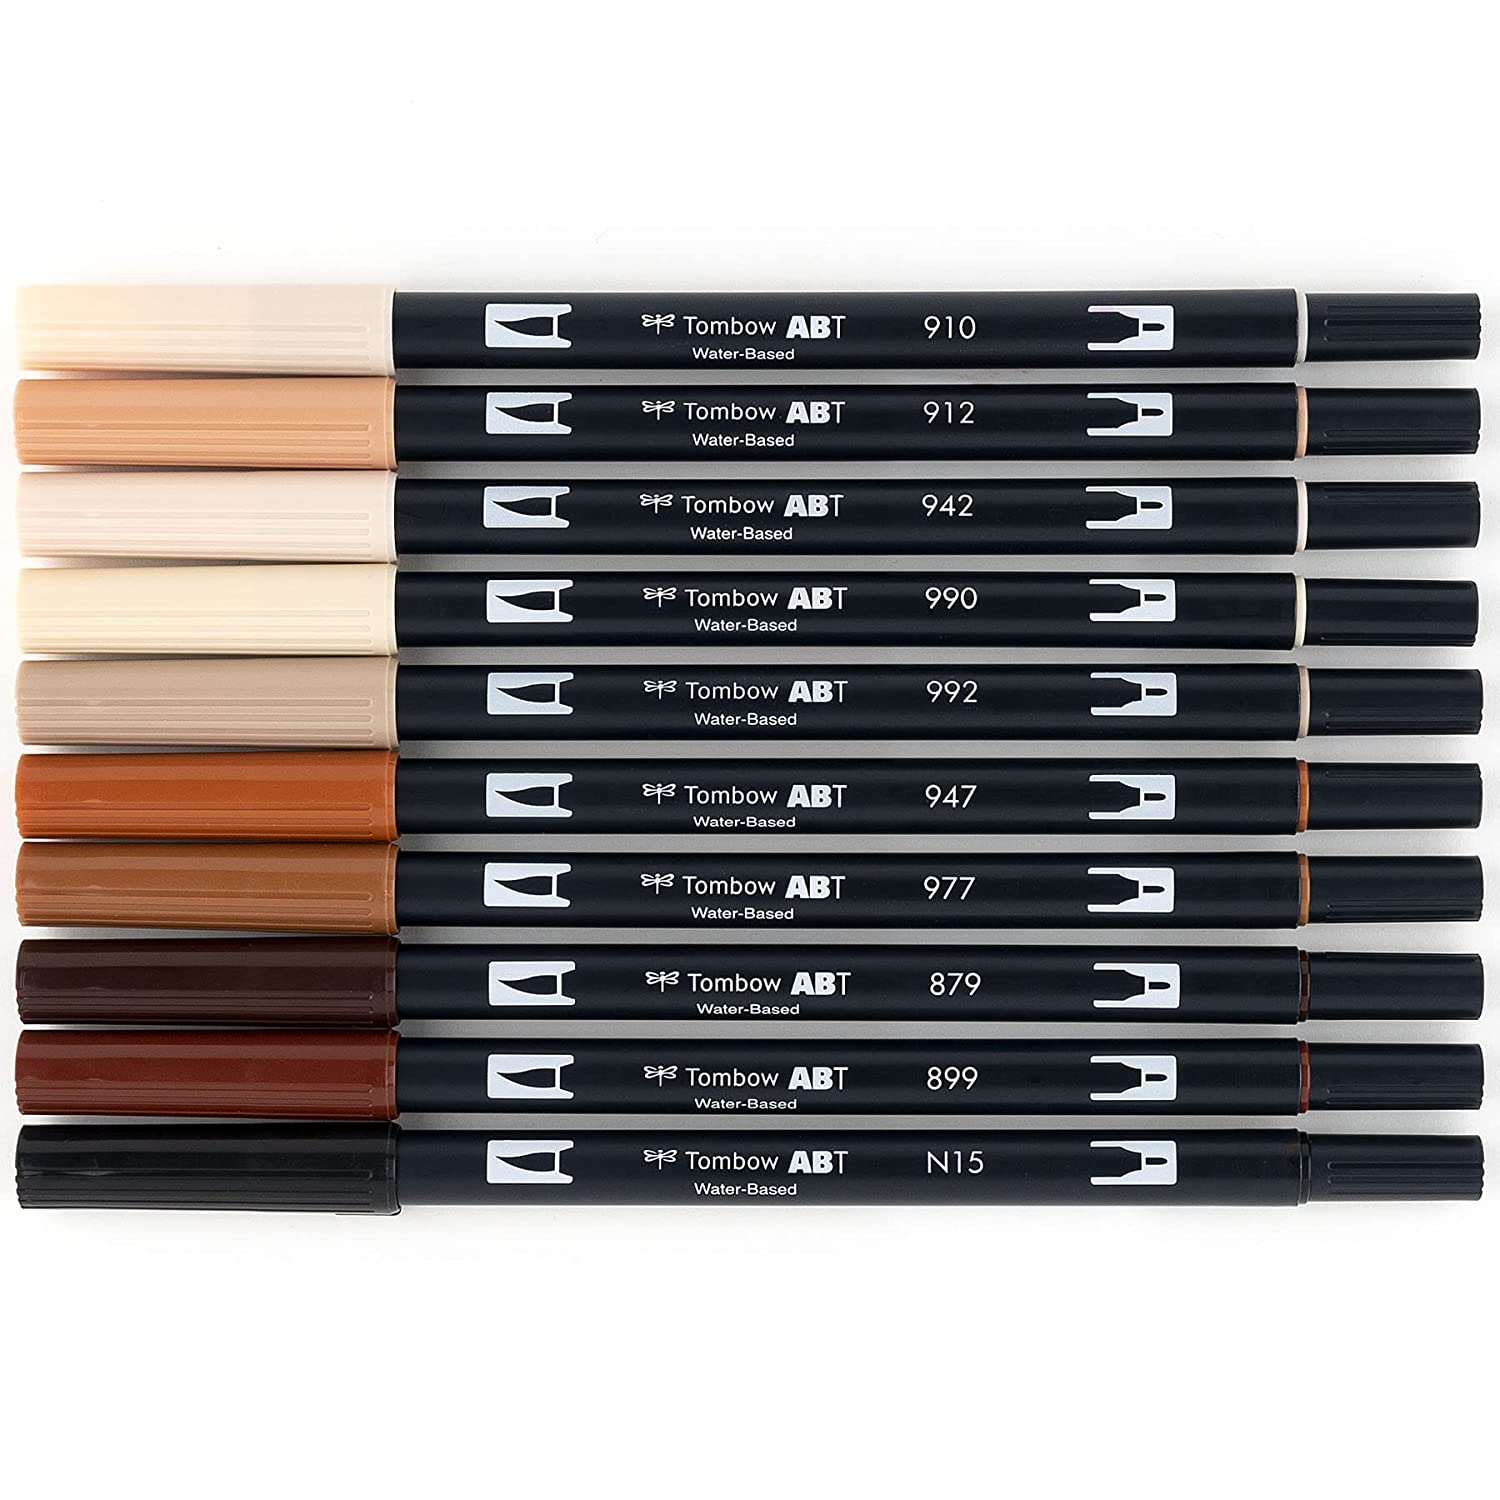 Tombow Dual Brush Pens (Set Of 10) - Portrait ABT-10C PO